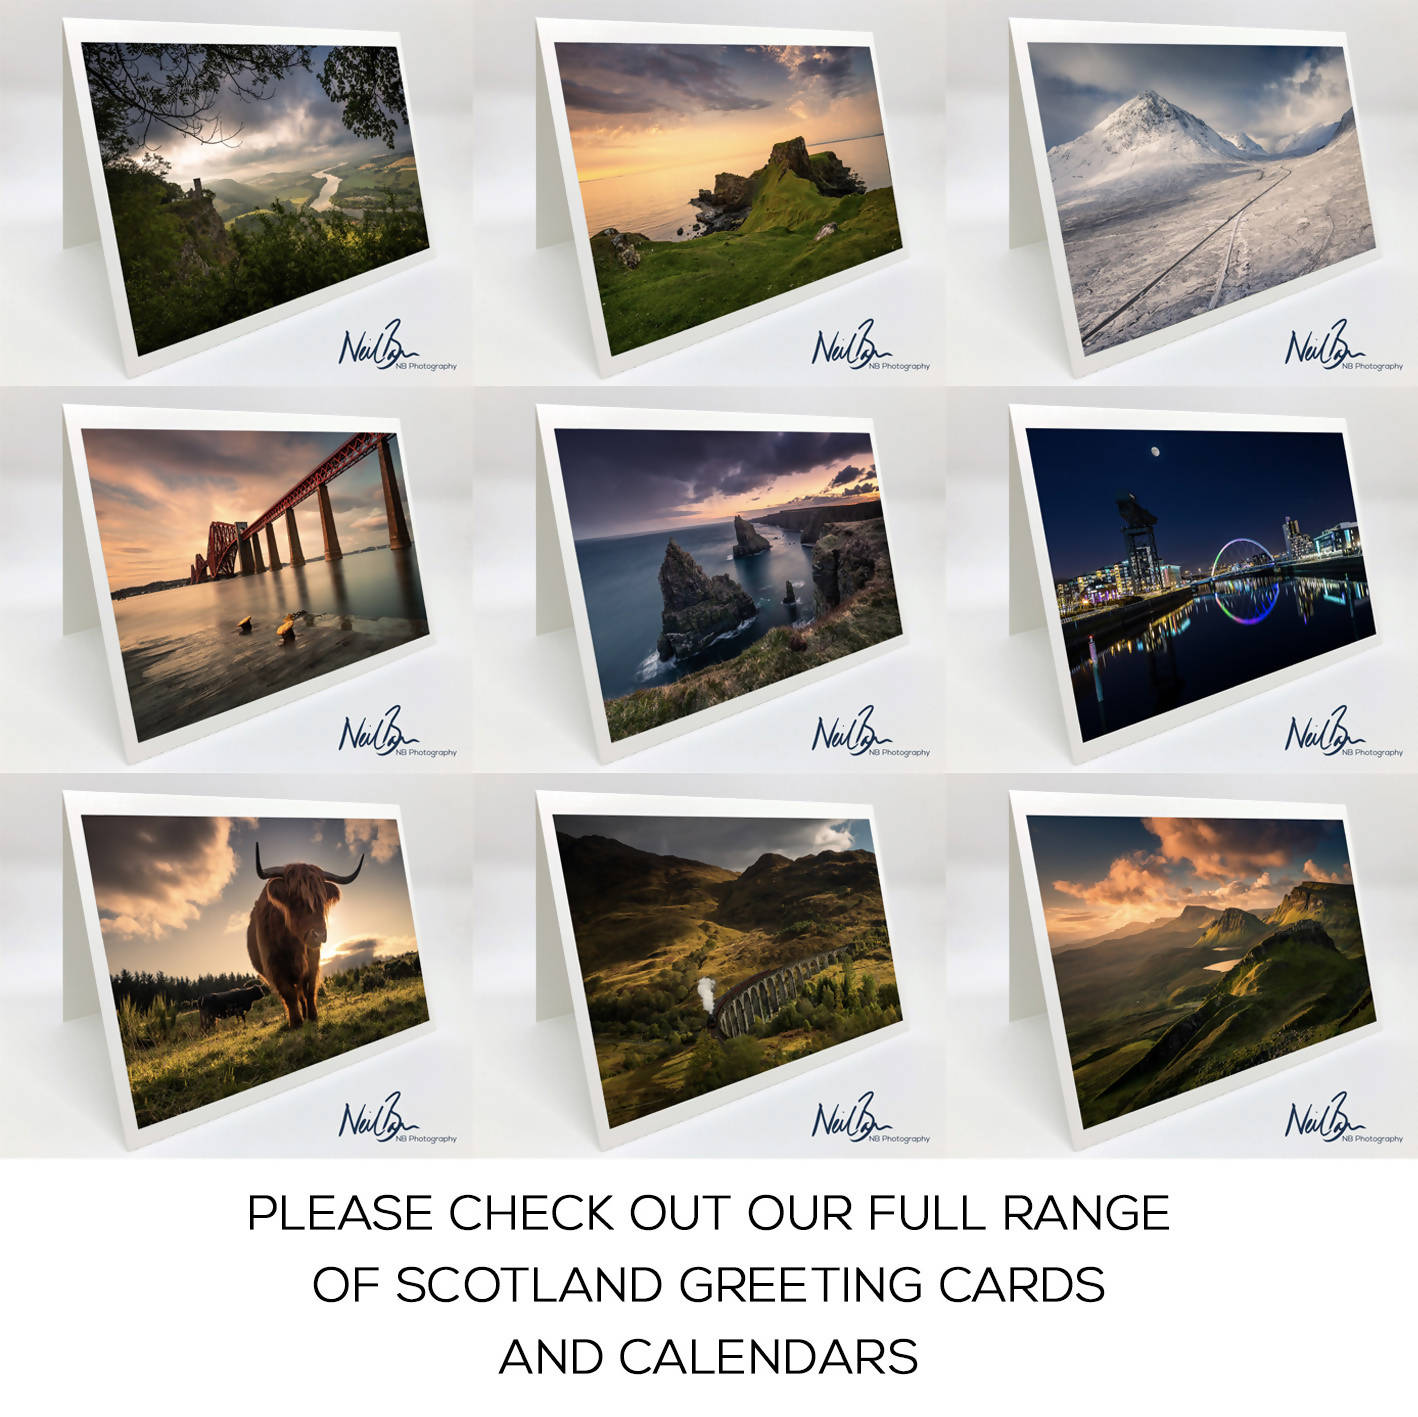 Trotternish from Quiraing, Isle of Skye - Scotland Greeting Card - Blank Inside